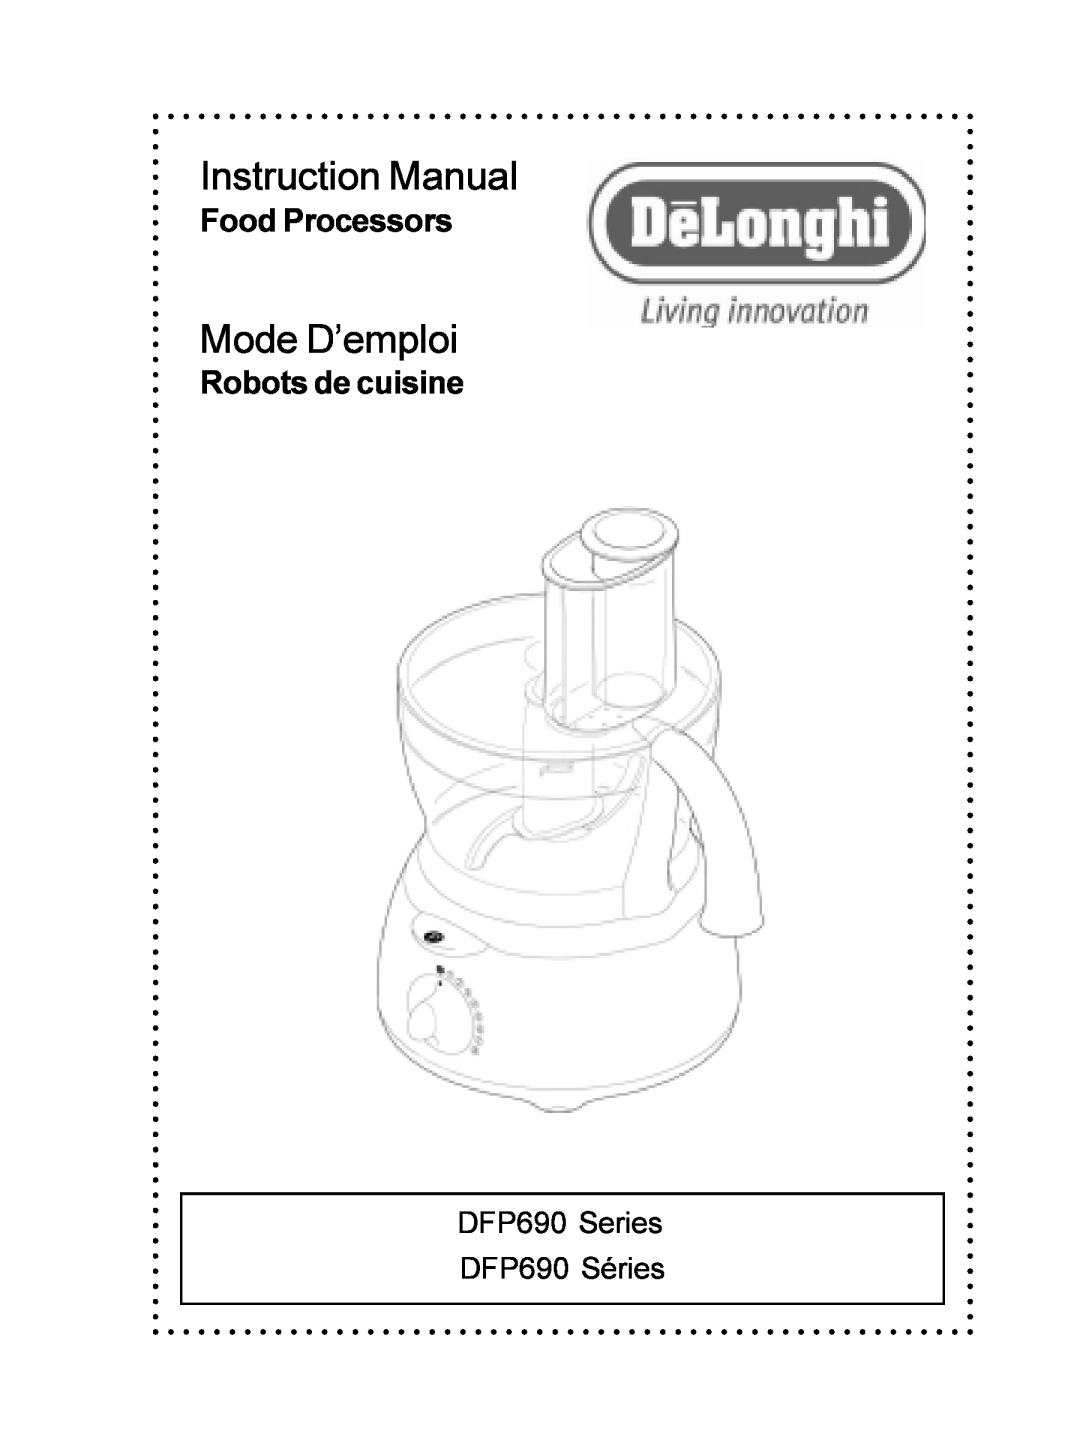 DeLonghi instruction manual DFP690 Series DFP690 Séries, Mode D’emploi, Food Processors, Robots de cuisine 